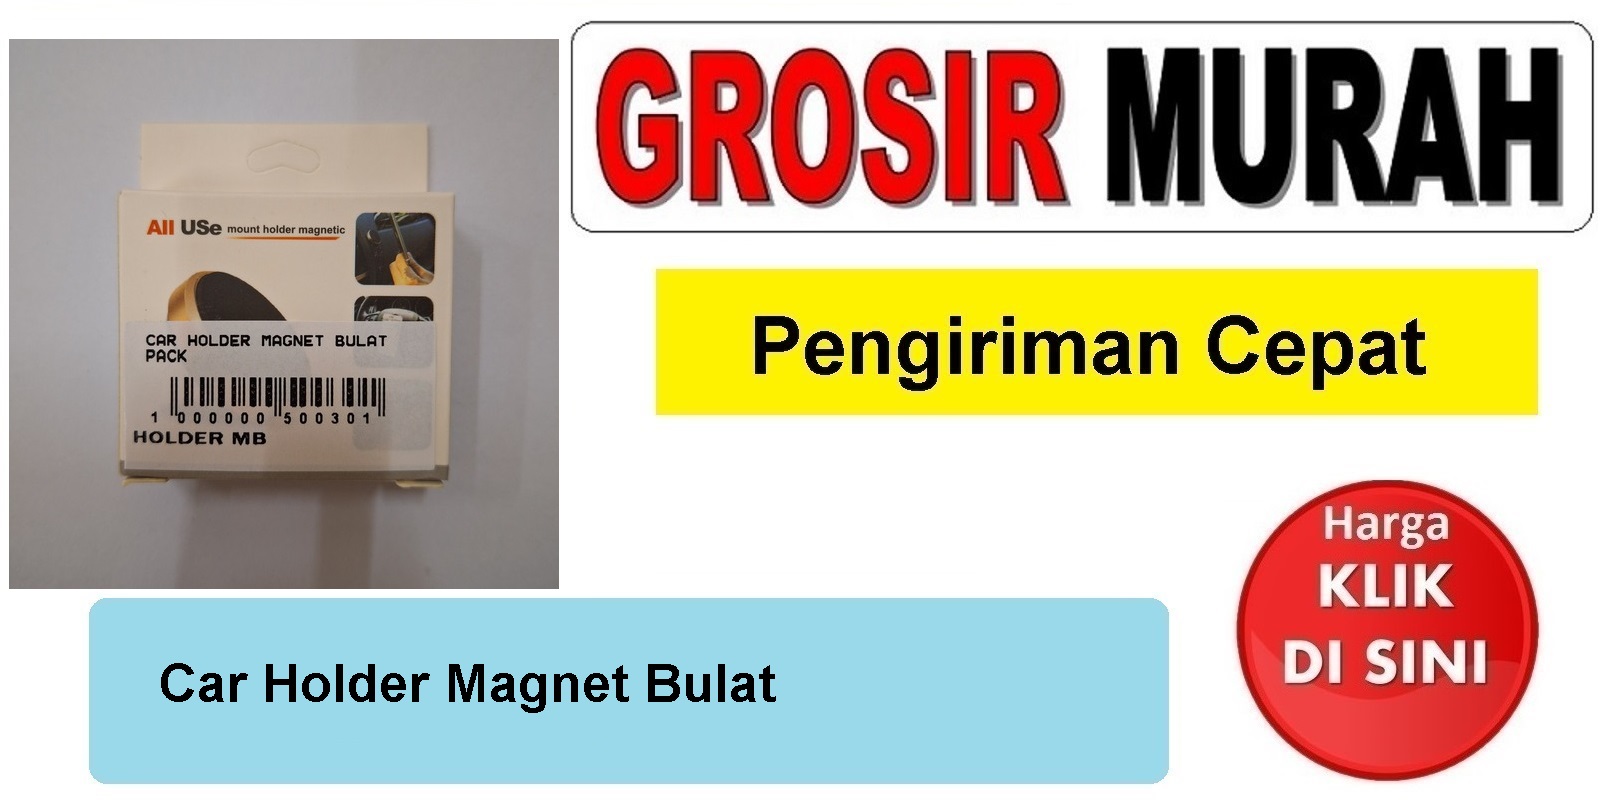 Car Holder Magnet Bulat Pack Dudukan hp mobil Spare Part hp Grosir